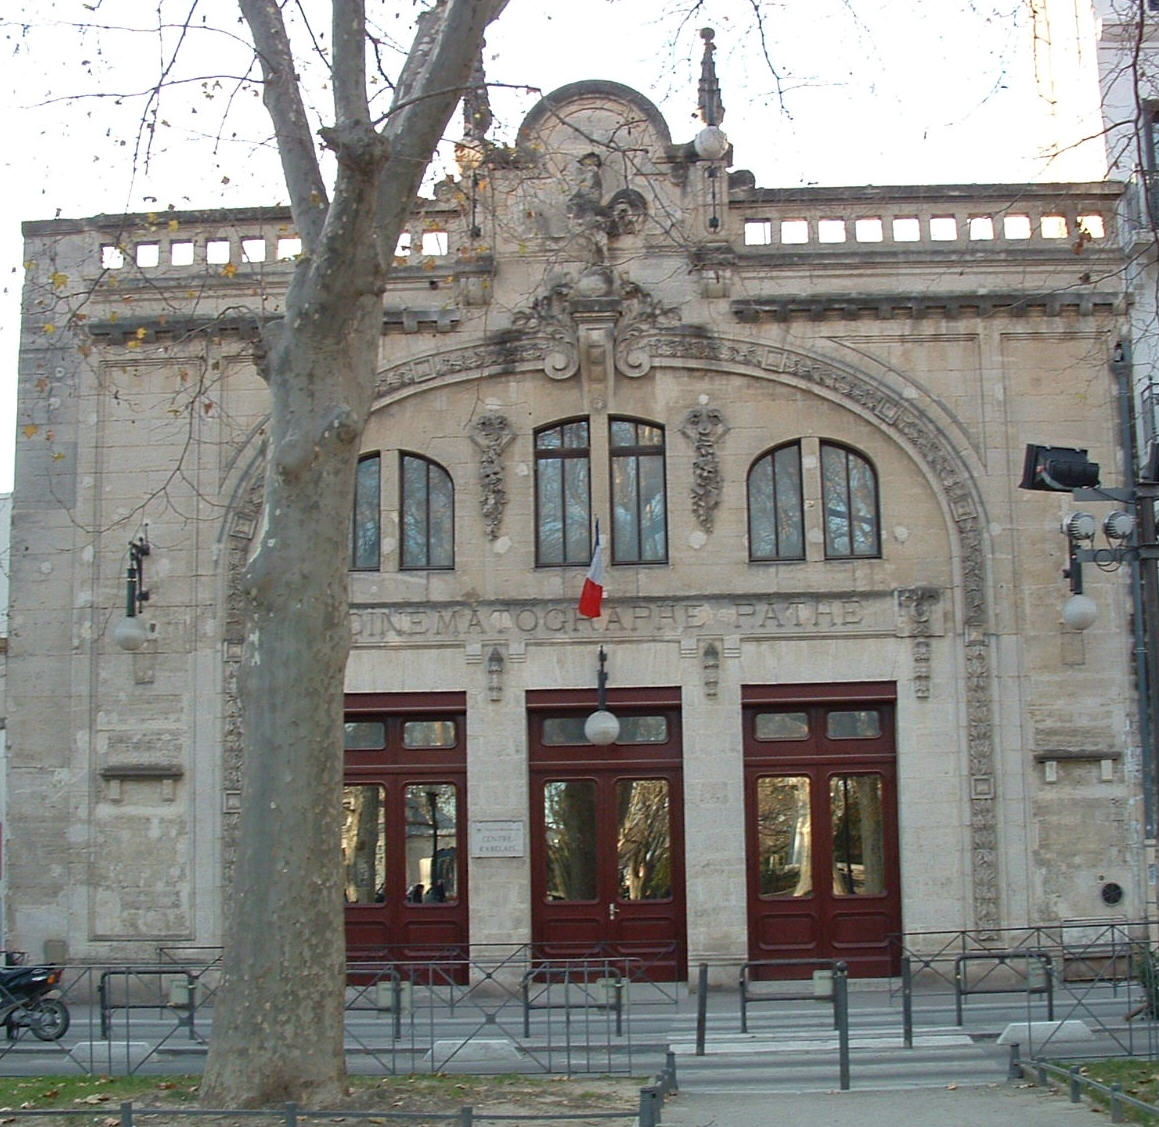 Old Pathé Cinema, Montpellier 